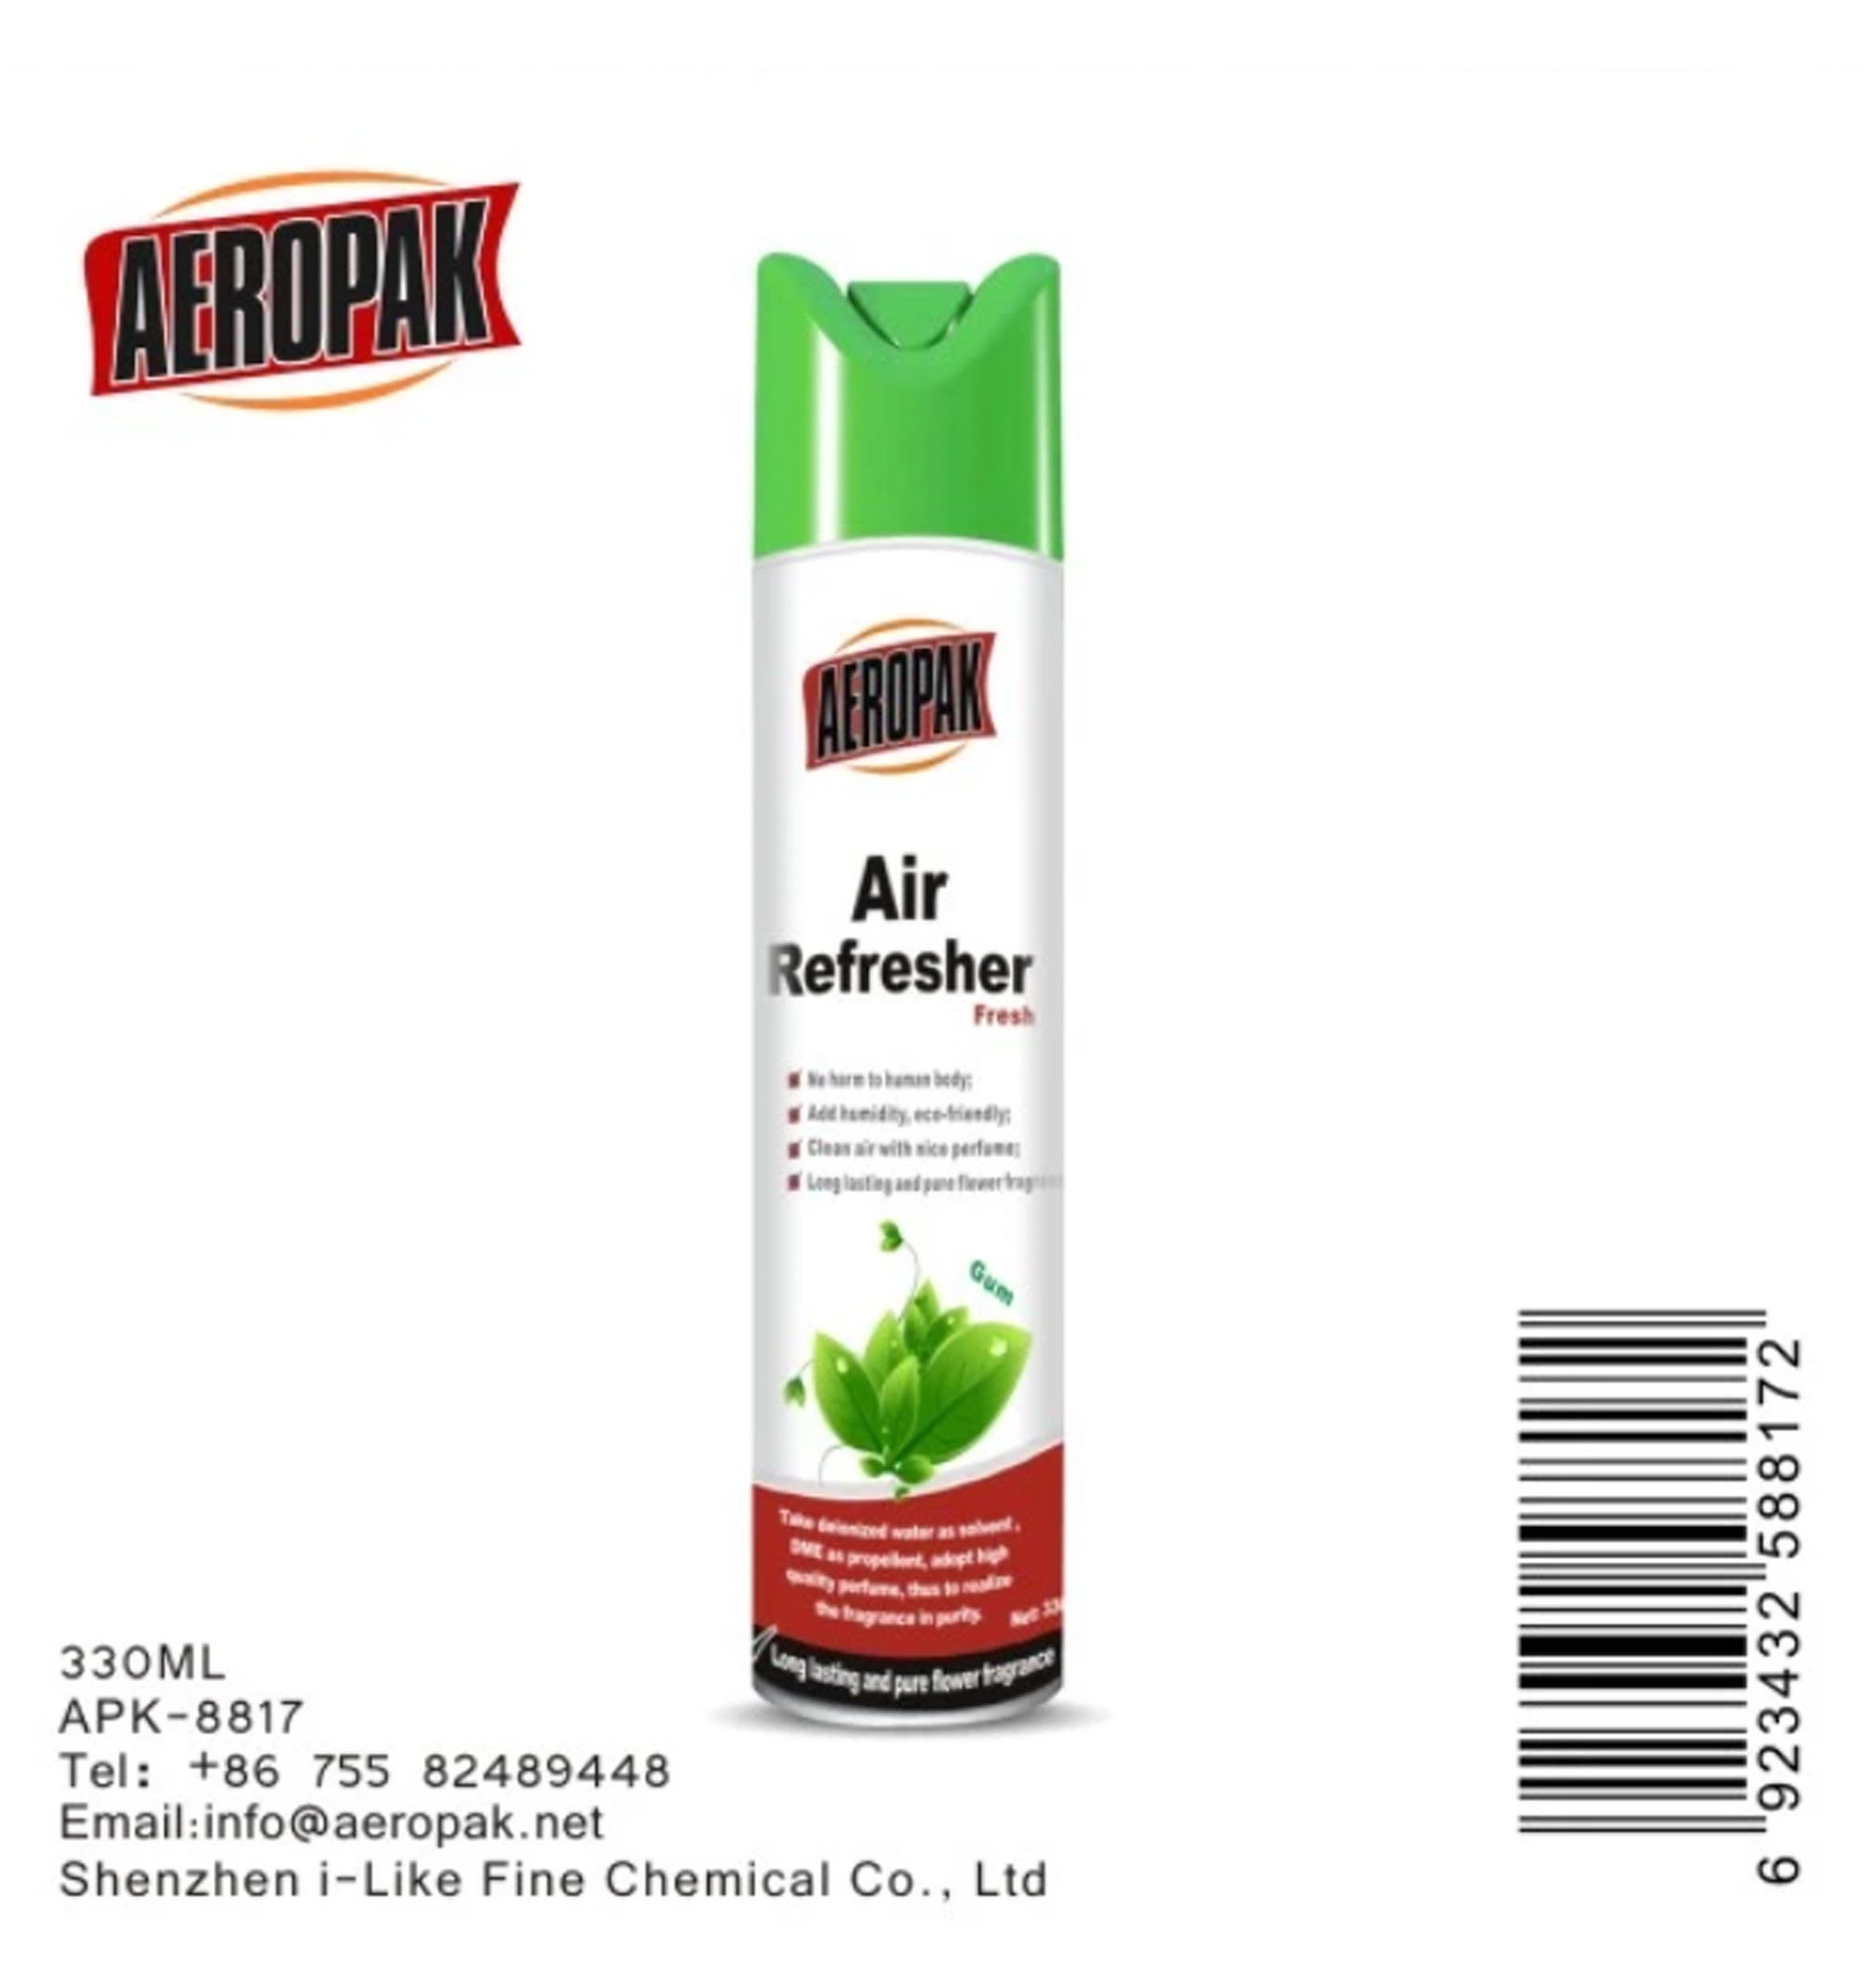  AEROPAK air refresher Manufactures